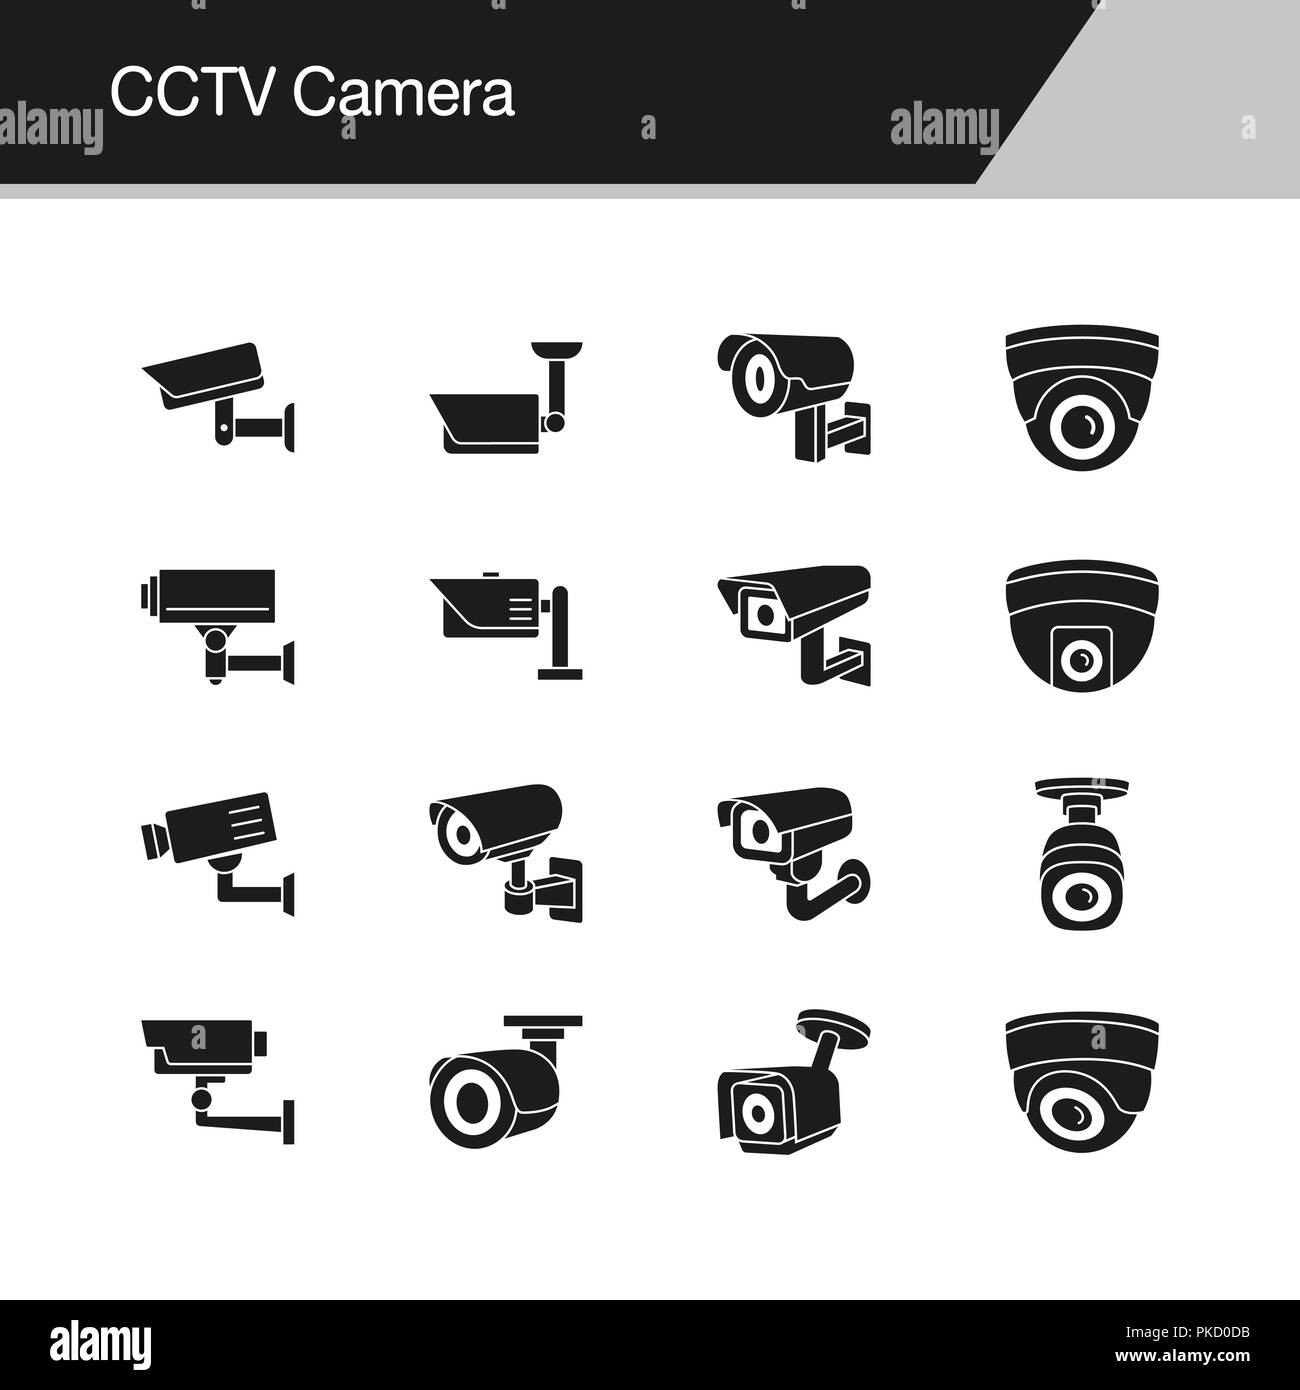 CCTV Camera icons. Design for presentation, graphic design, mobile application, web design, infographics, UI. Vector illustration. Stock Vector